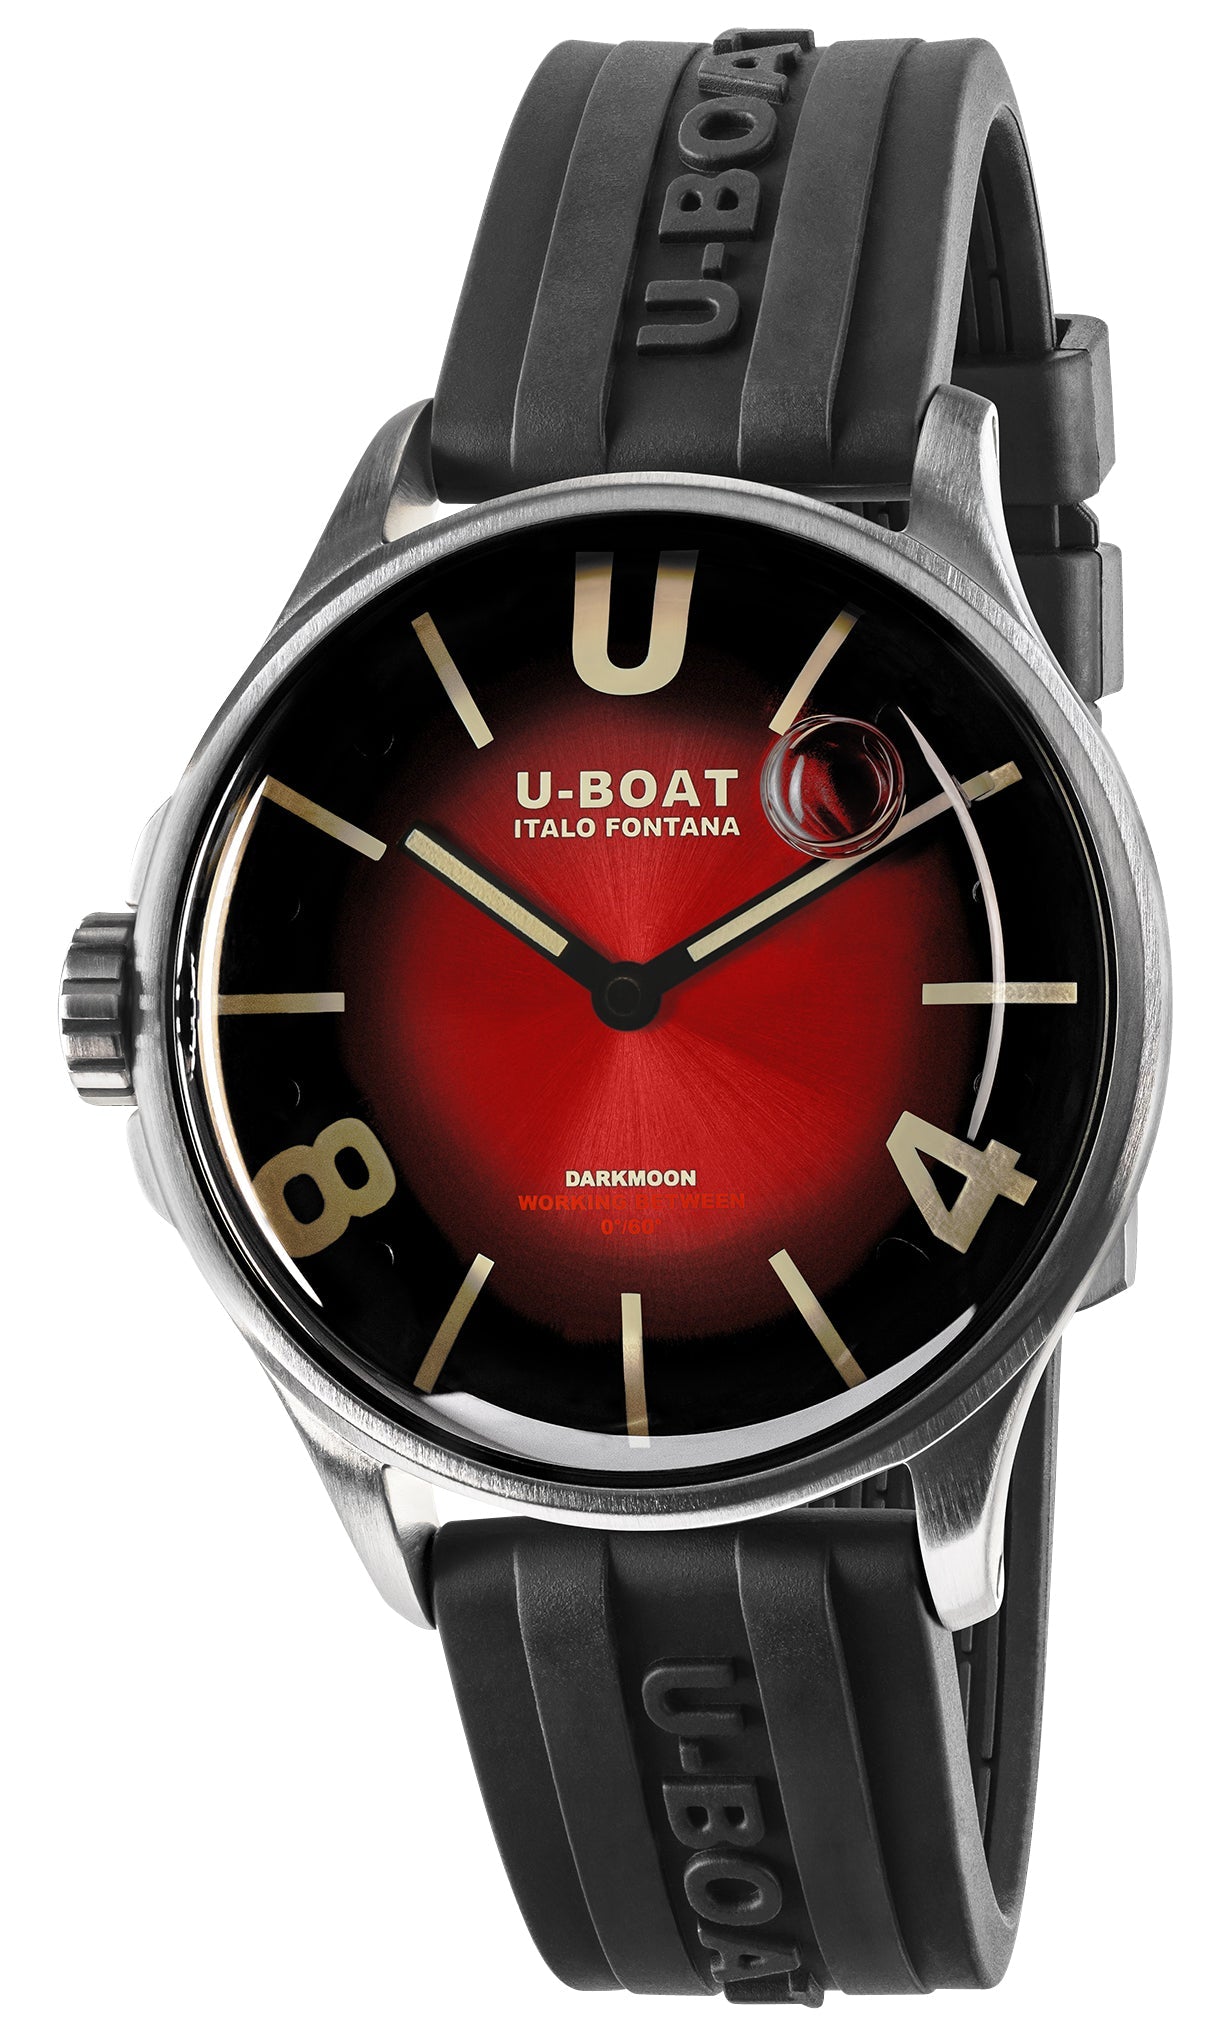 update alt-text with template Watches - Mens-U-Boat-9500-35 - 40 mm, 40 - 45 mm, Darkmoon, mens, menswatches, new arrivals, red, round, rpSKU_8702, rpSKU_8703, rpSKU_8704, rpSKU_9021, rpSKU_9305, rubber, stainless steel case, swiss quartz, U-Boat, watches-Watches & Beyond